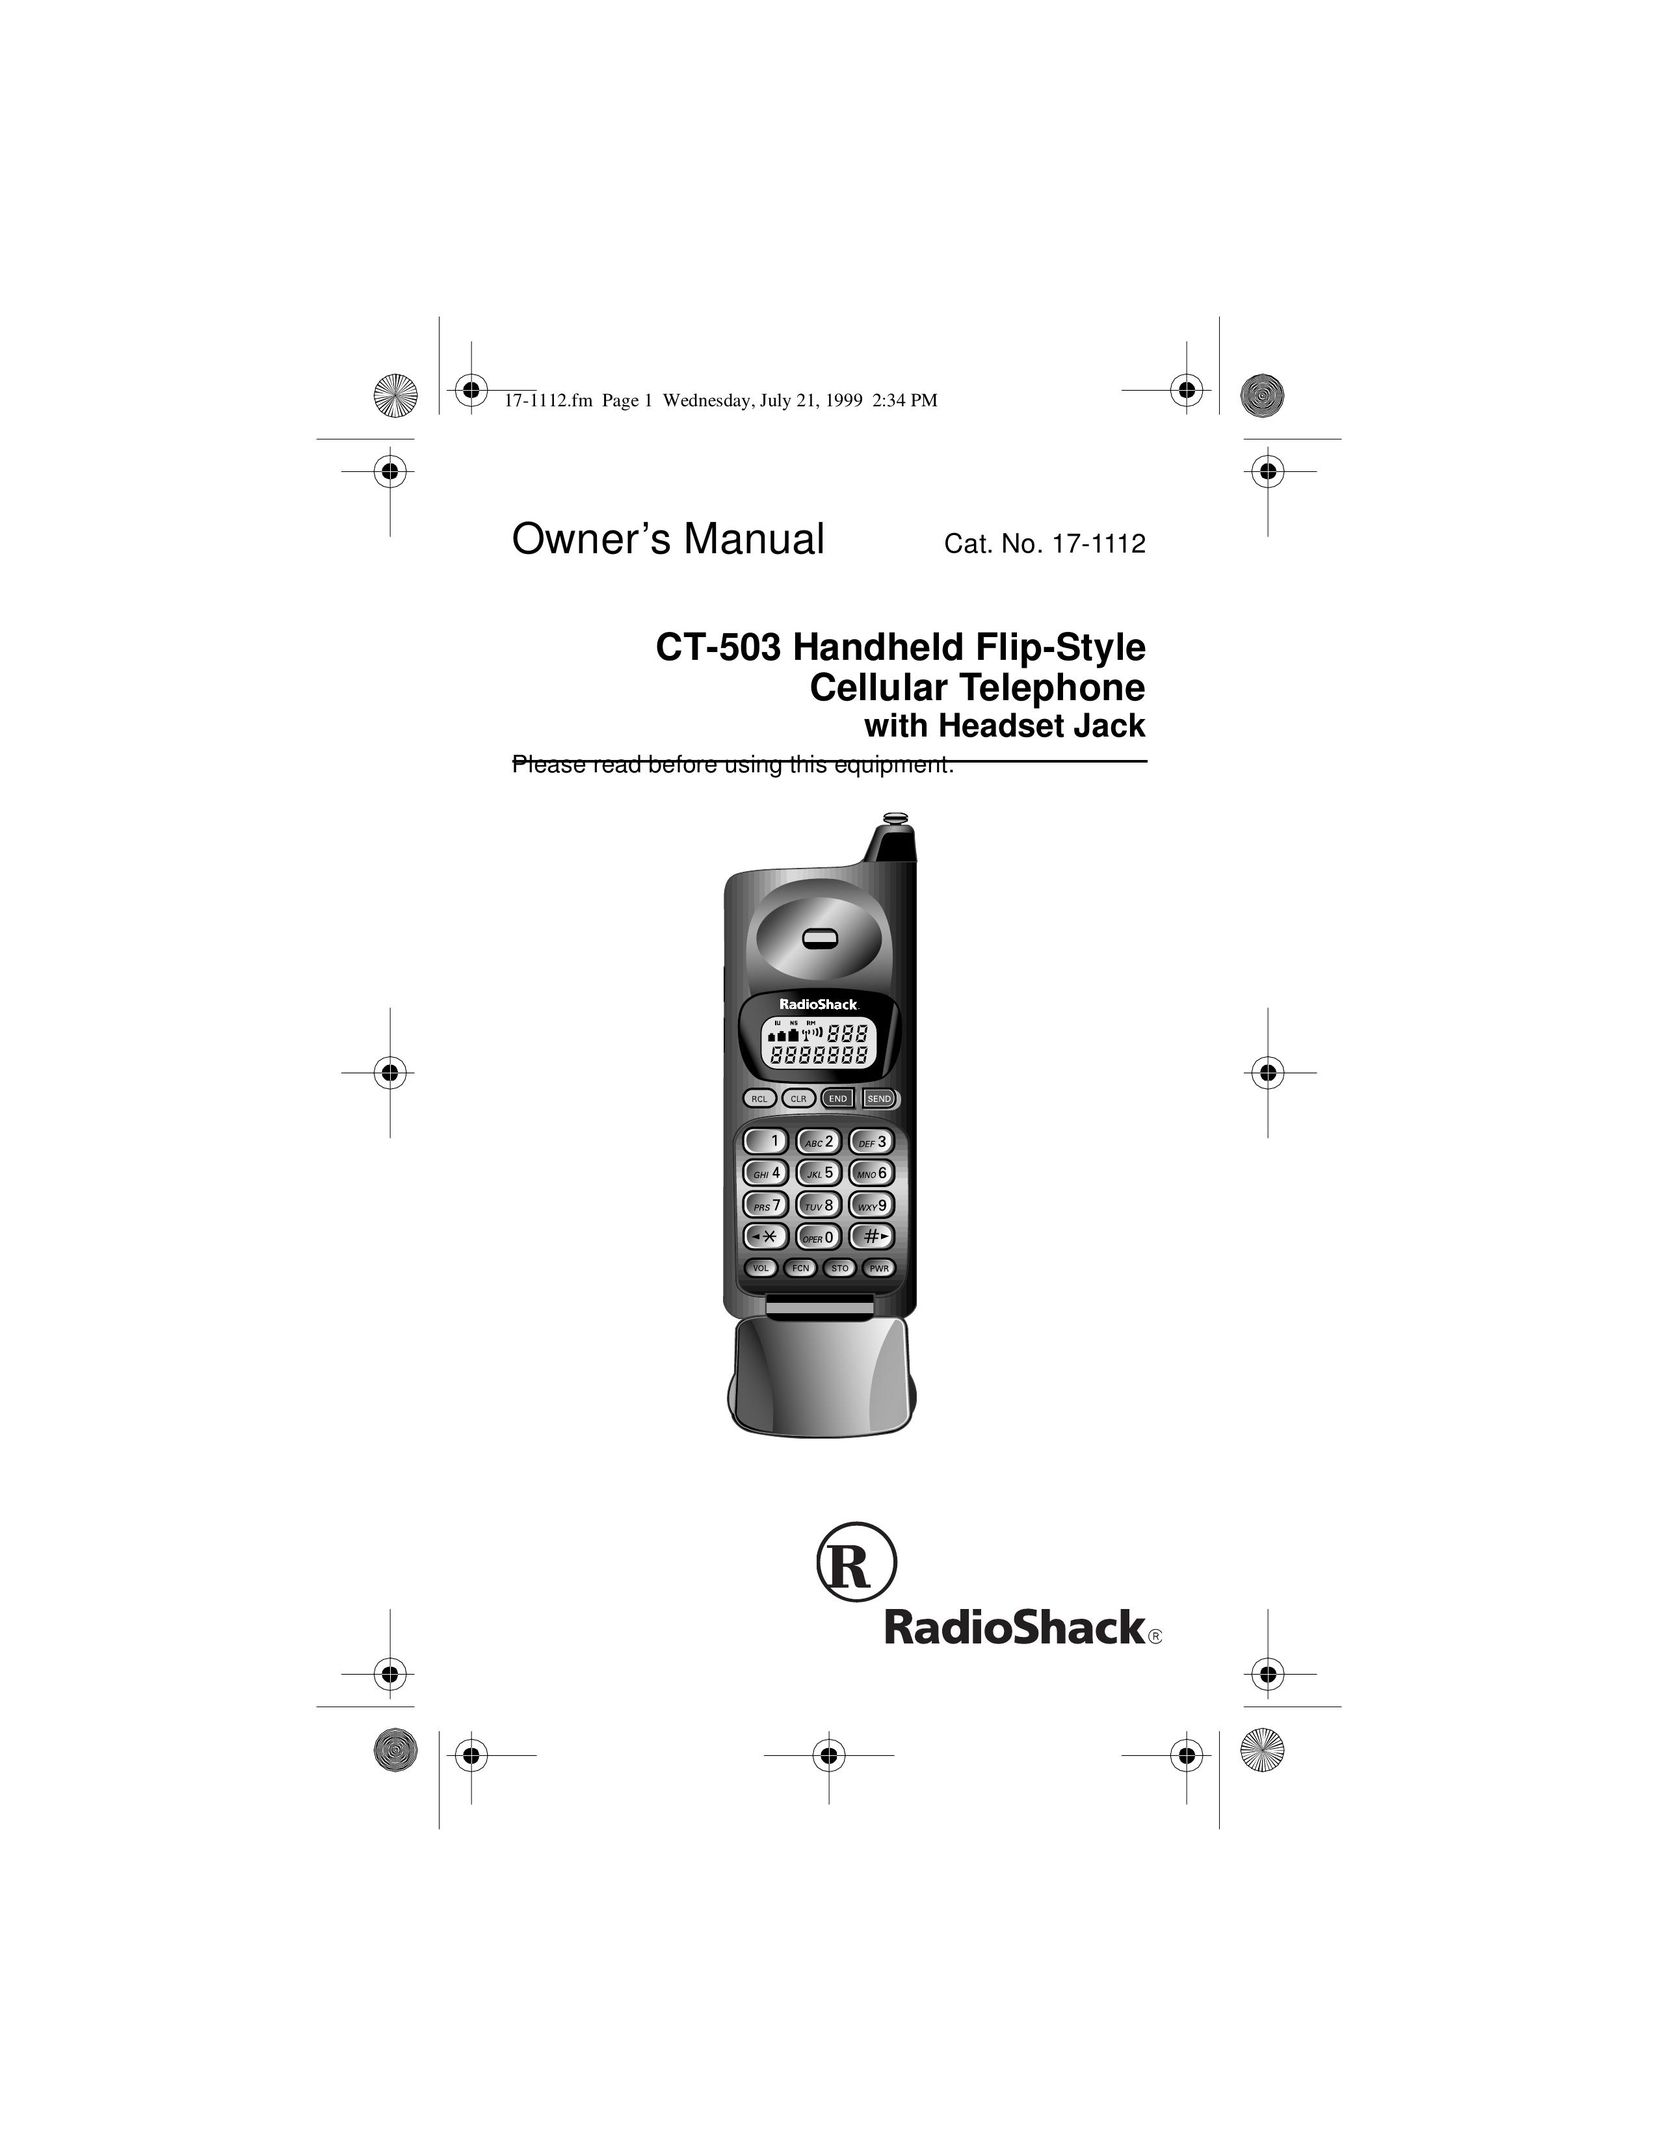 Radio Shack CT-503 Cell Phone User Manual